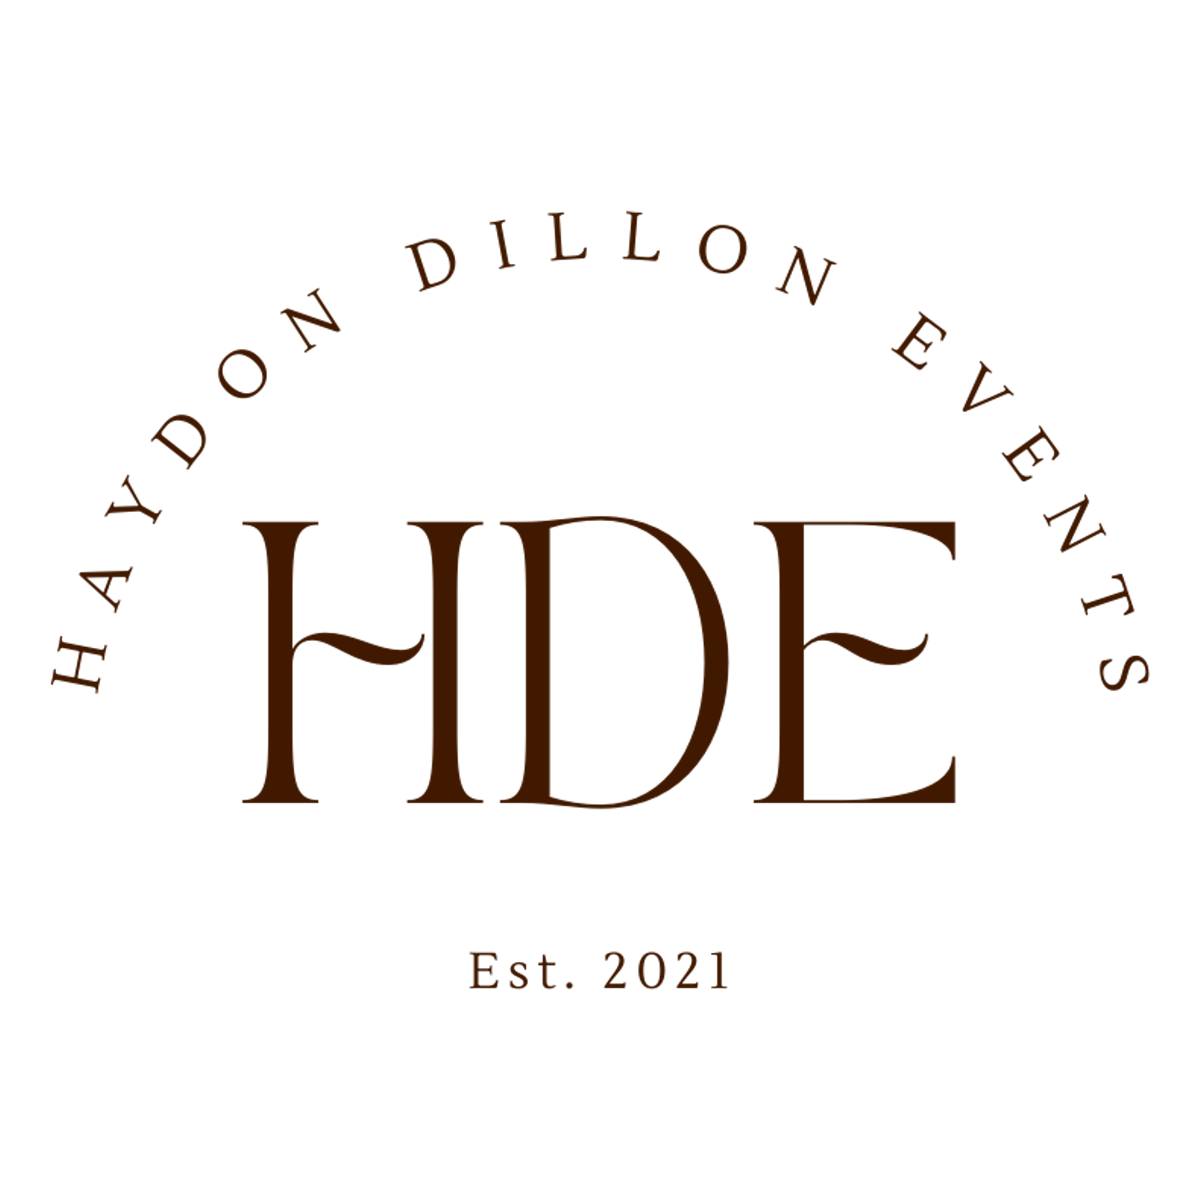 Haydon Dillon Events